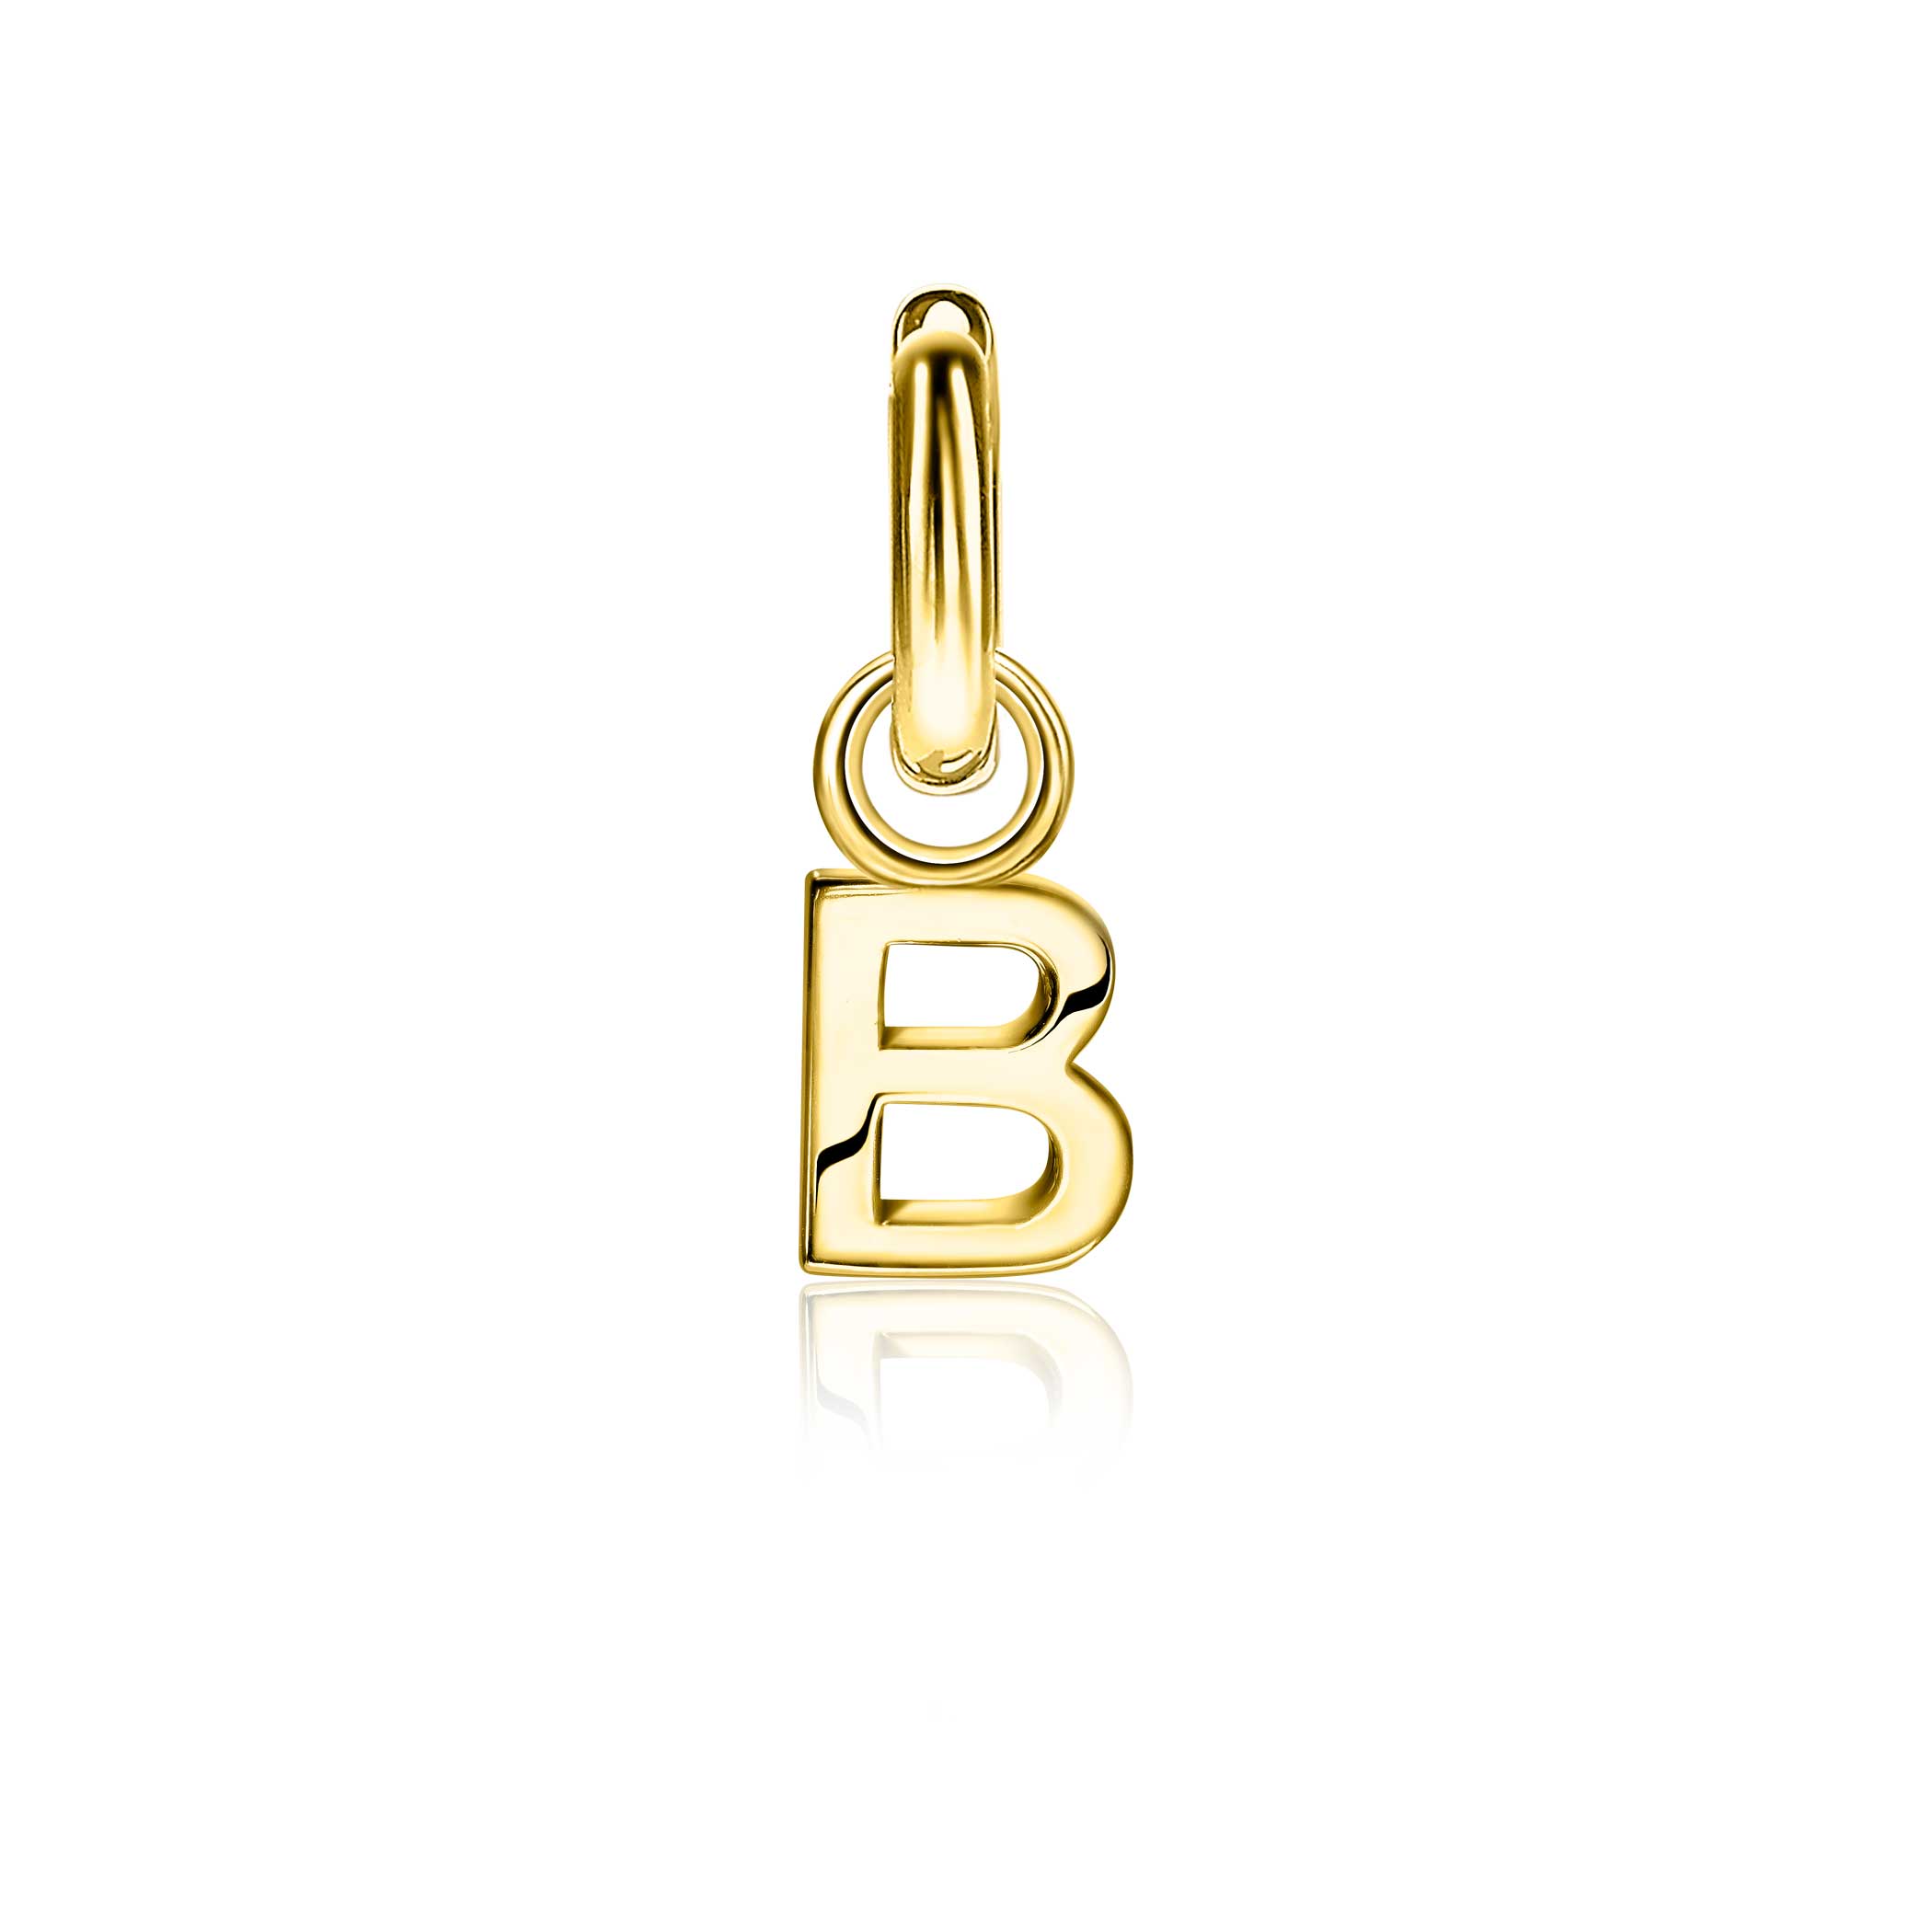 ZINZI Gold Plated Letter Earrings Pendant B price per piece ZICH2145B (excl. hoop earrings)